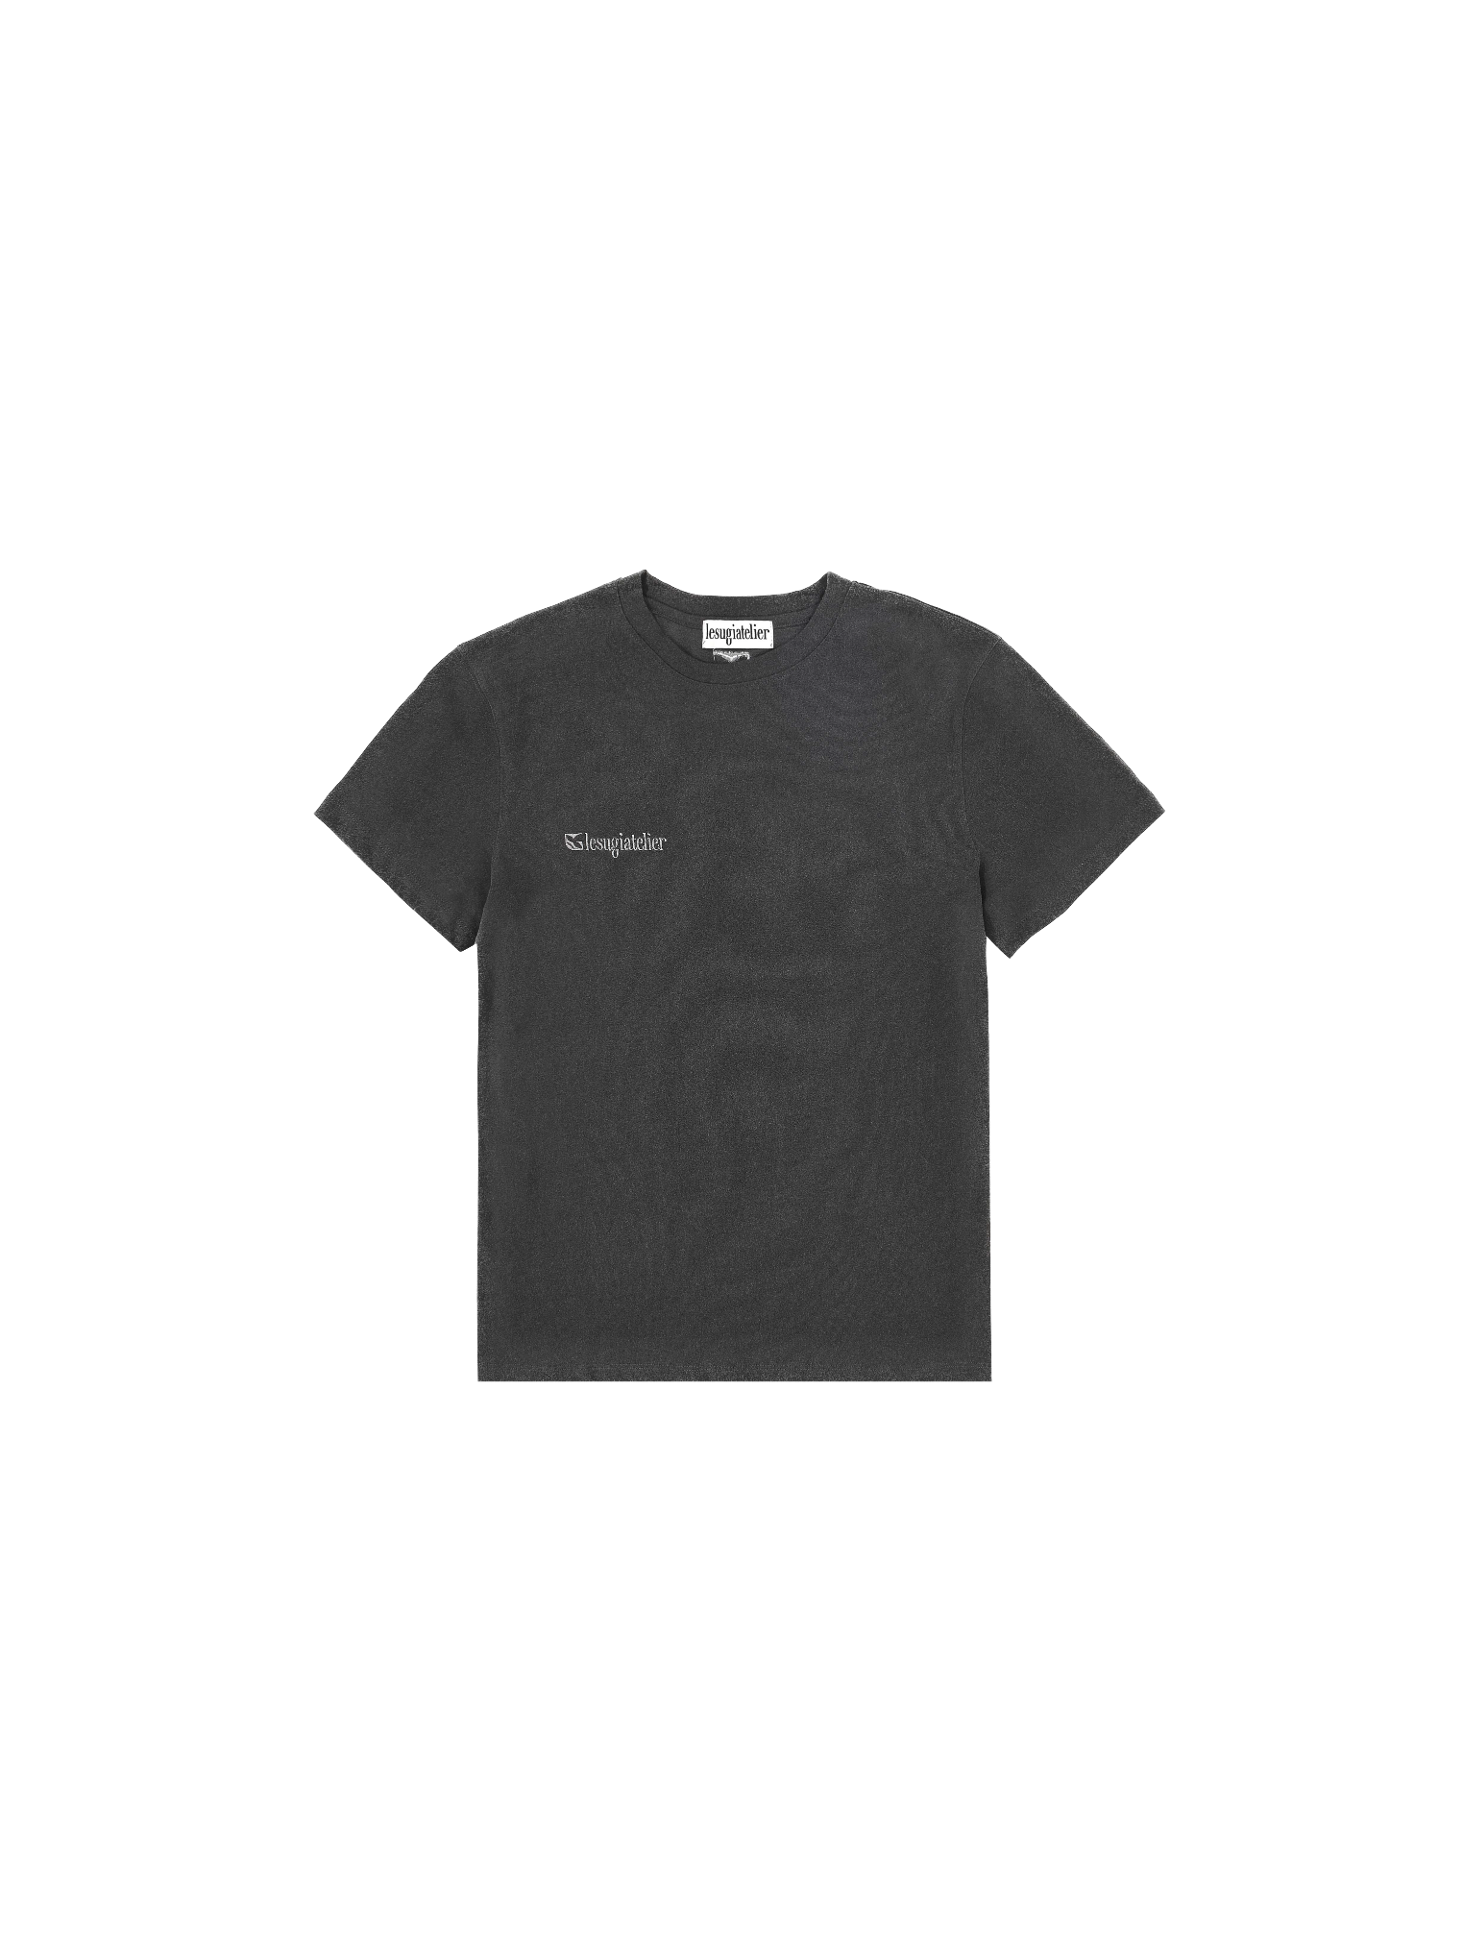 Lesugiatelier Logo T-Shirt / Grey